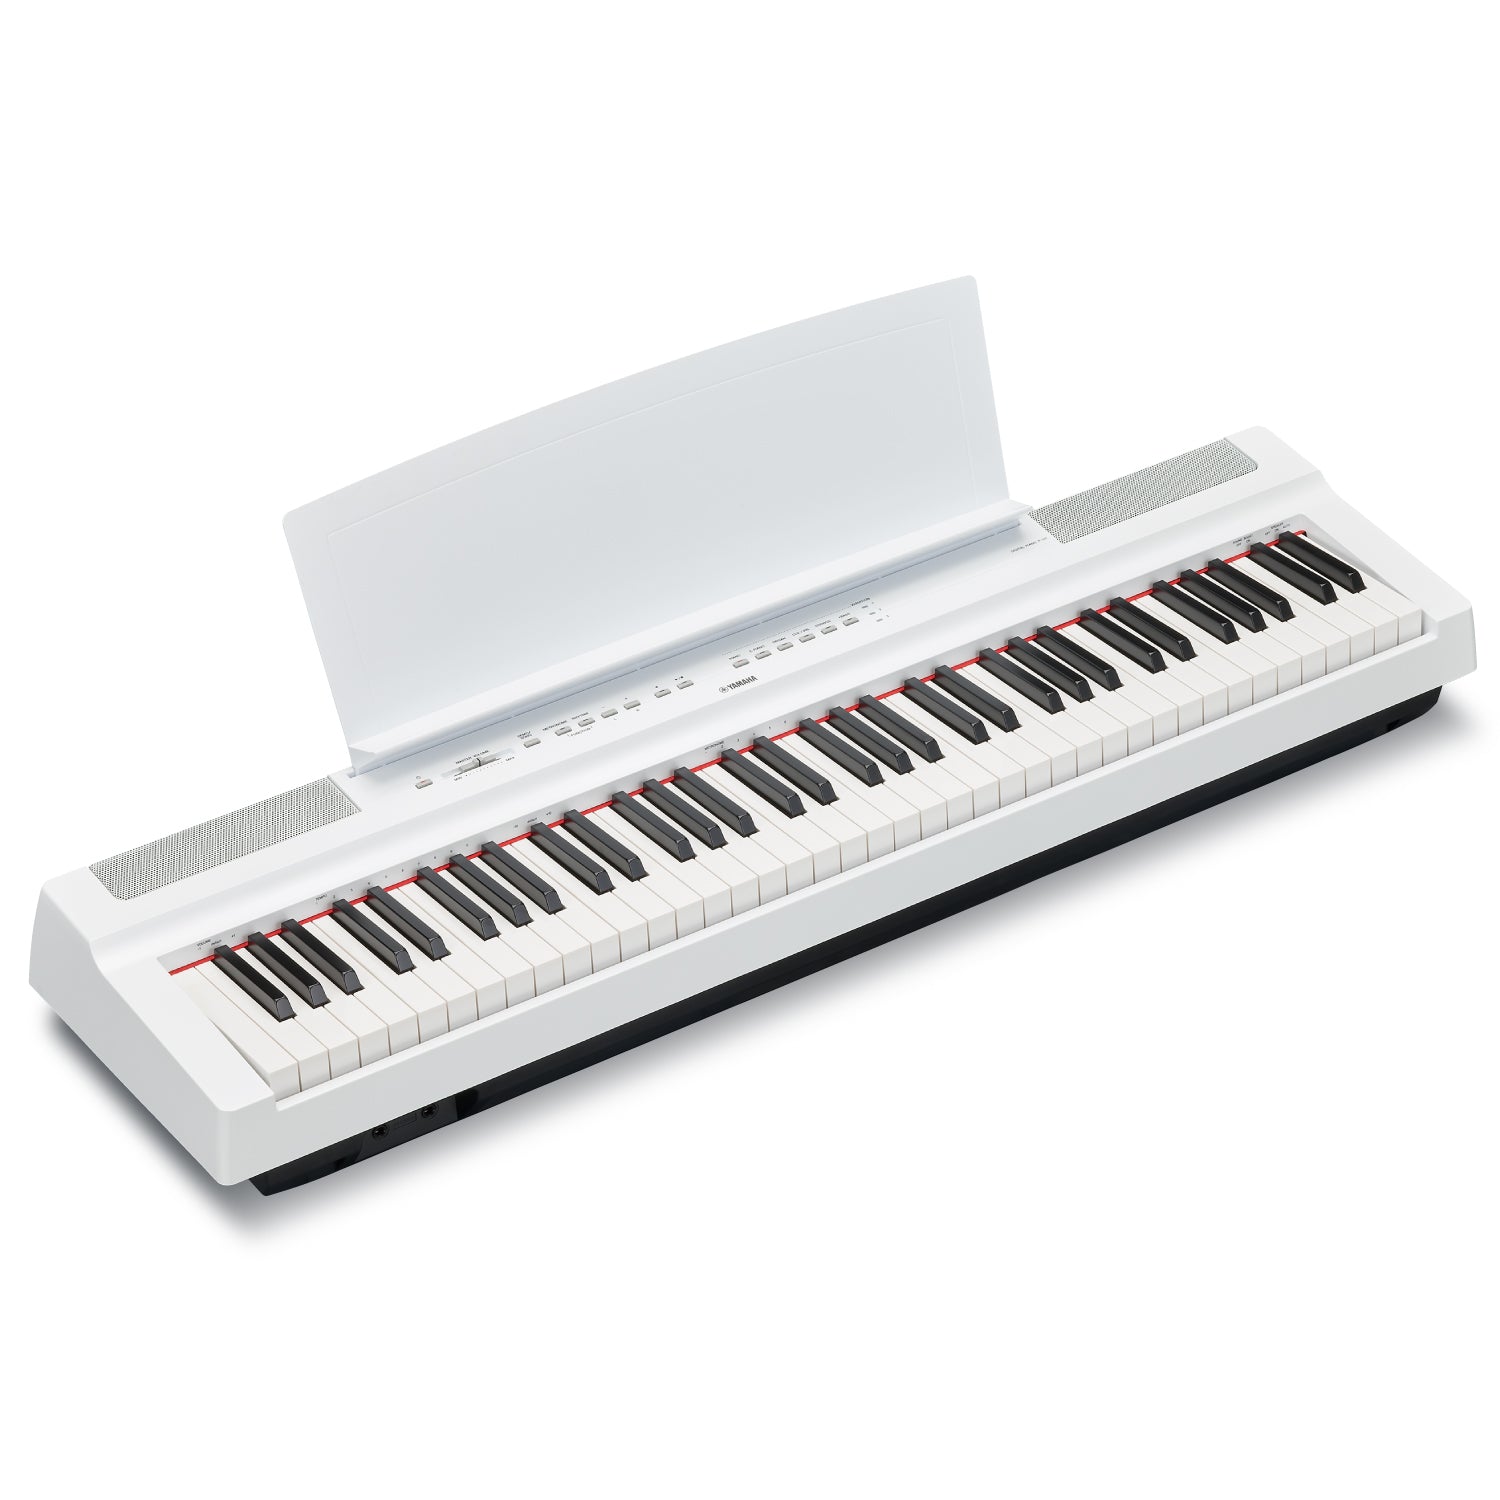 Portables – Apex Piano Showroom